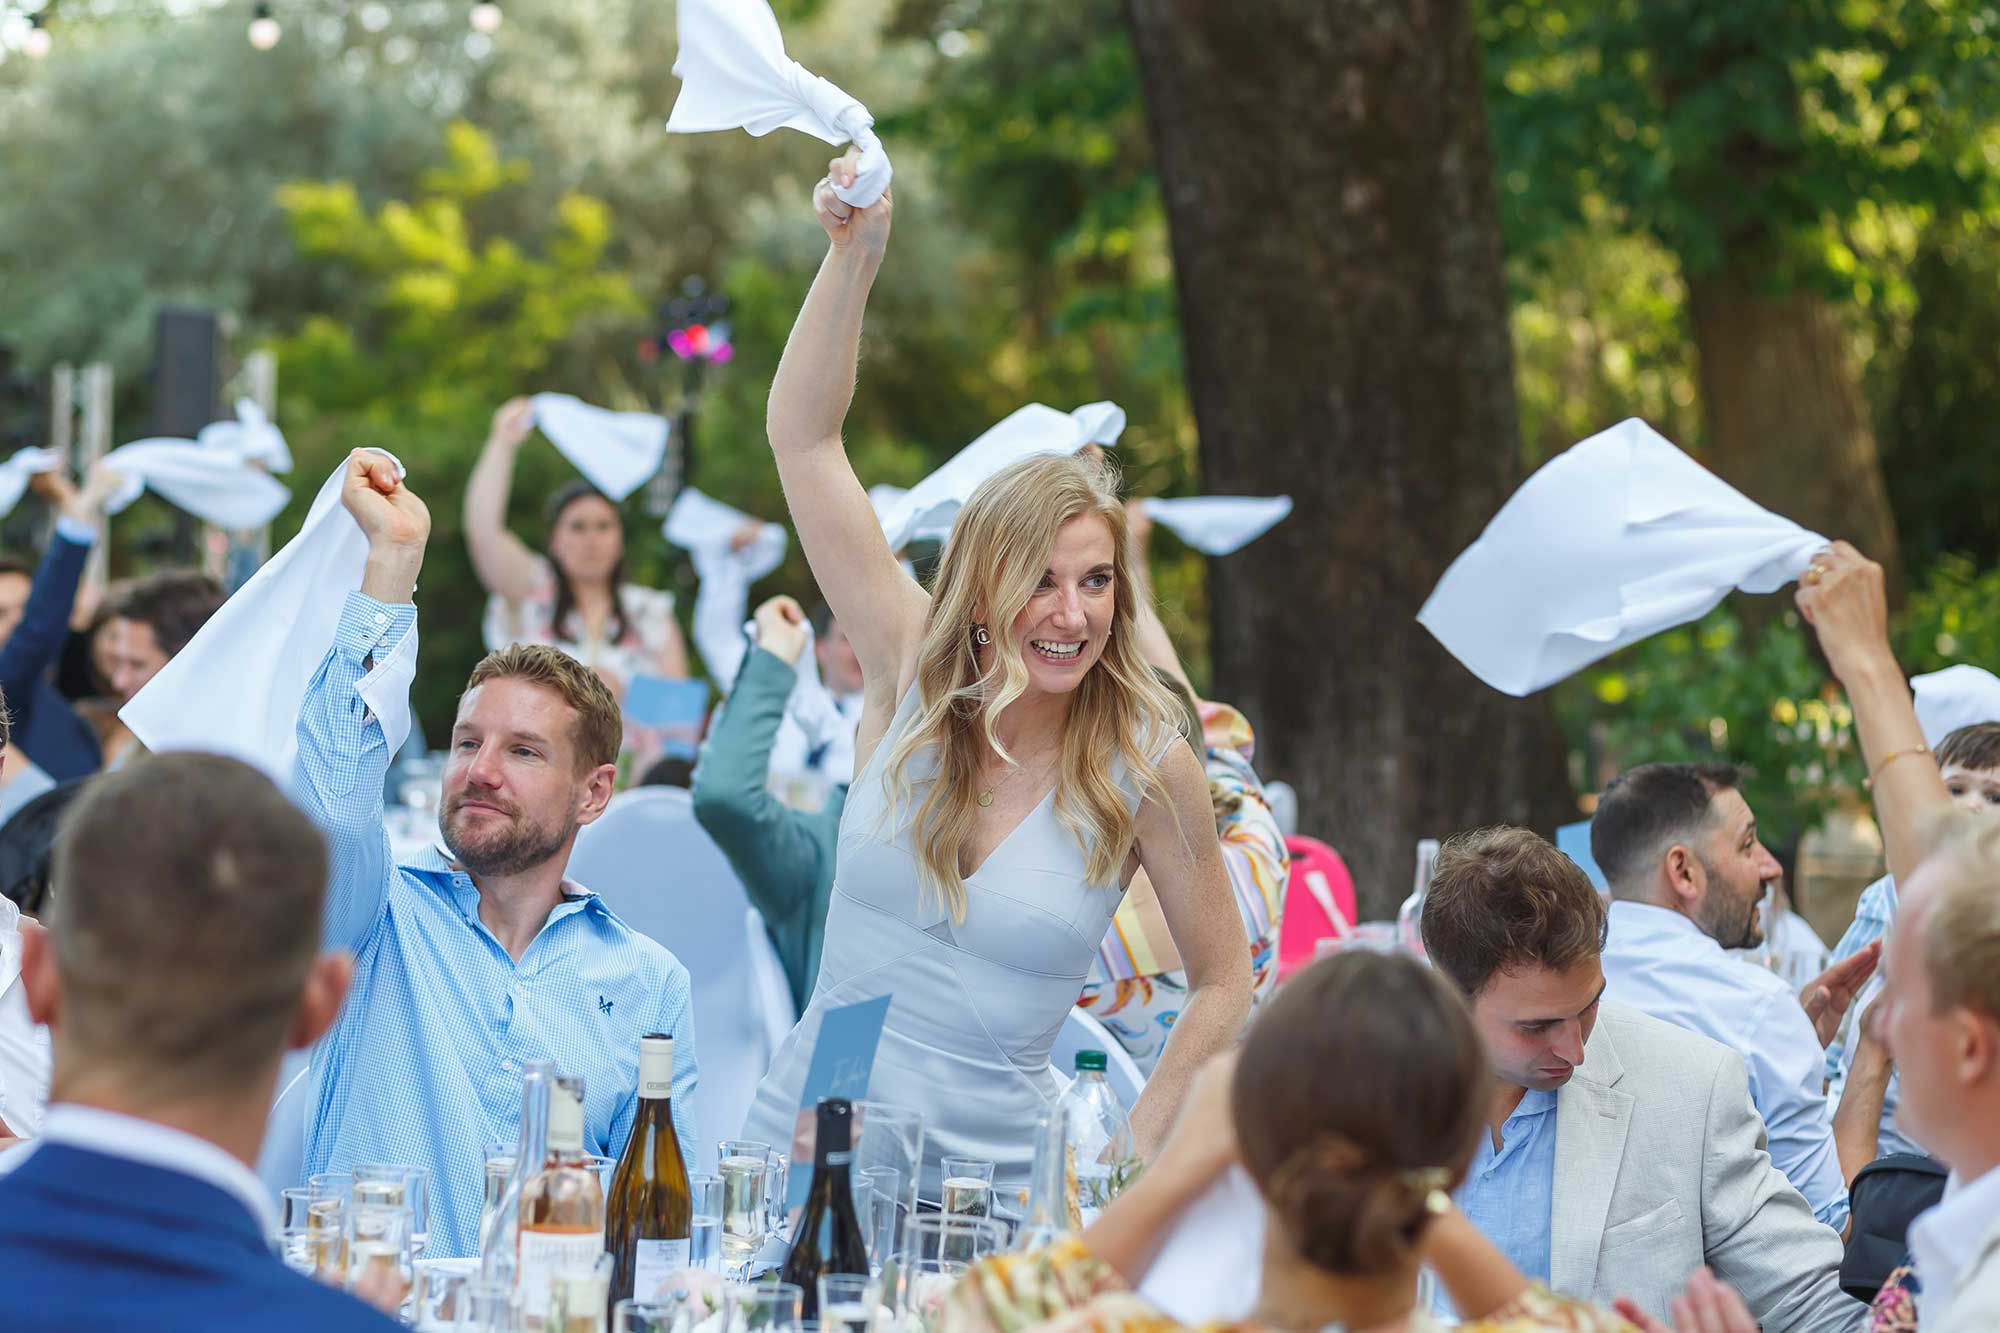 South of France wedding celebration, napkin waving